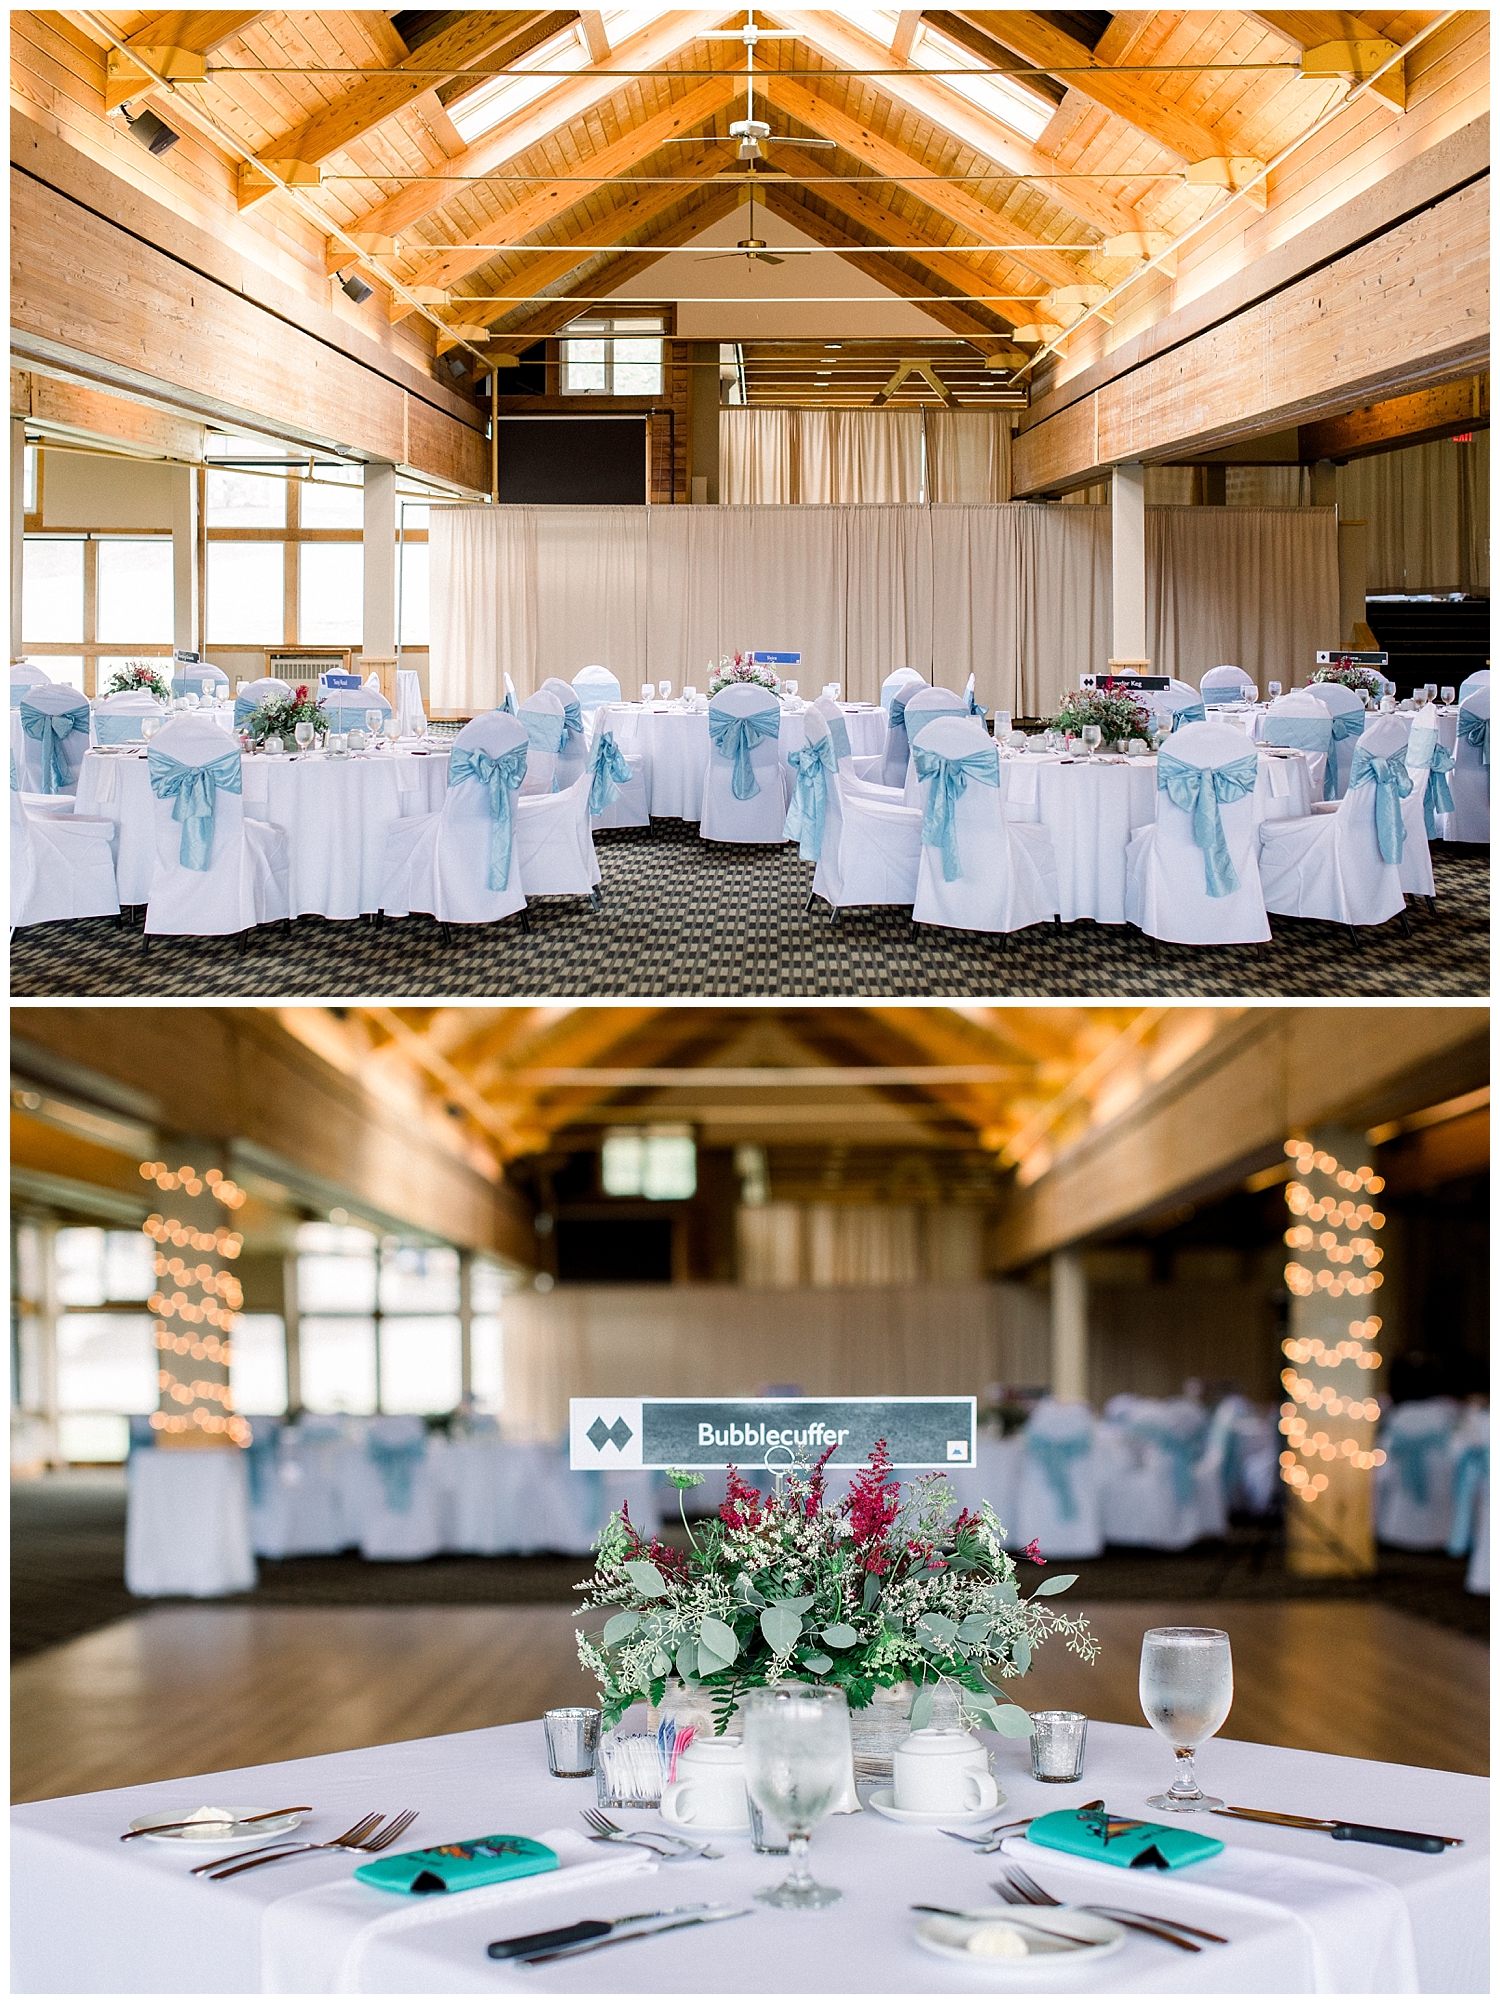 Reception setup at Sugarloaf Mountain Resort Wedding in Maine, photos by Halie Olszowy.